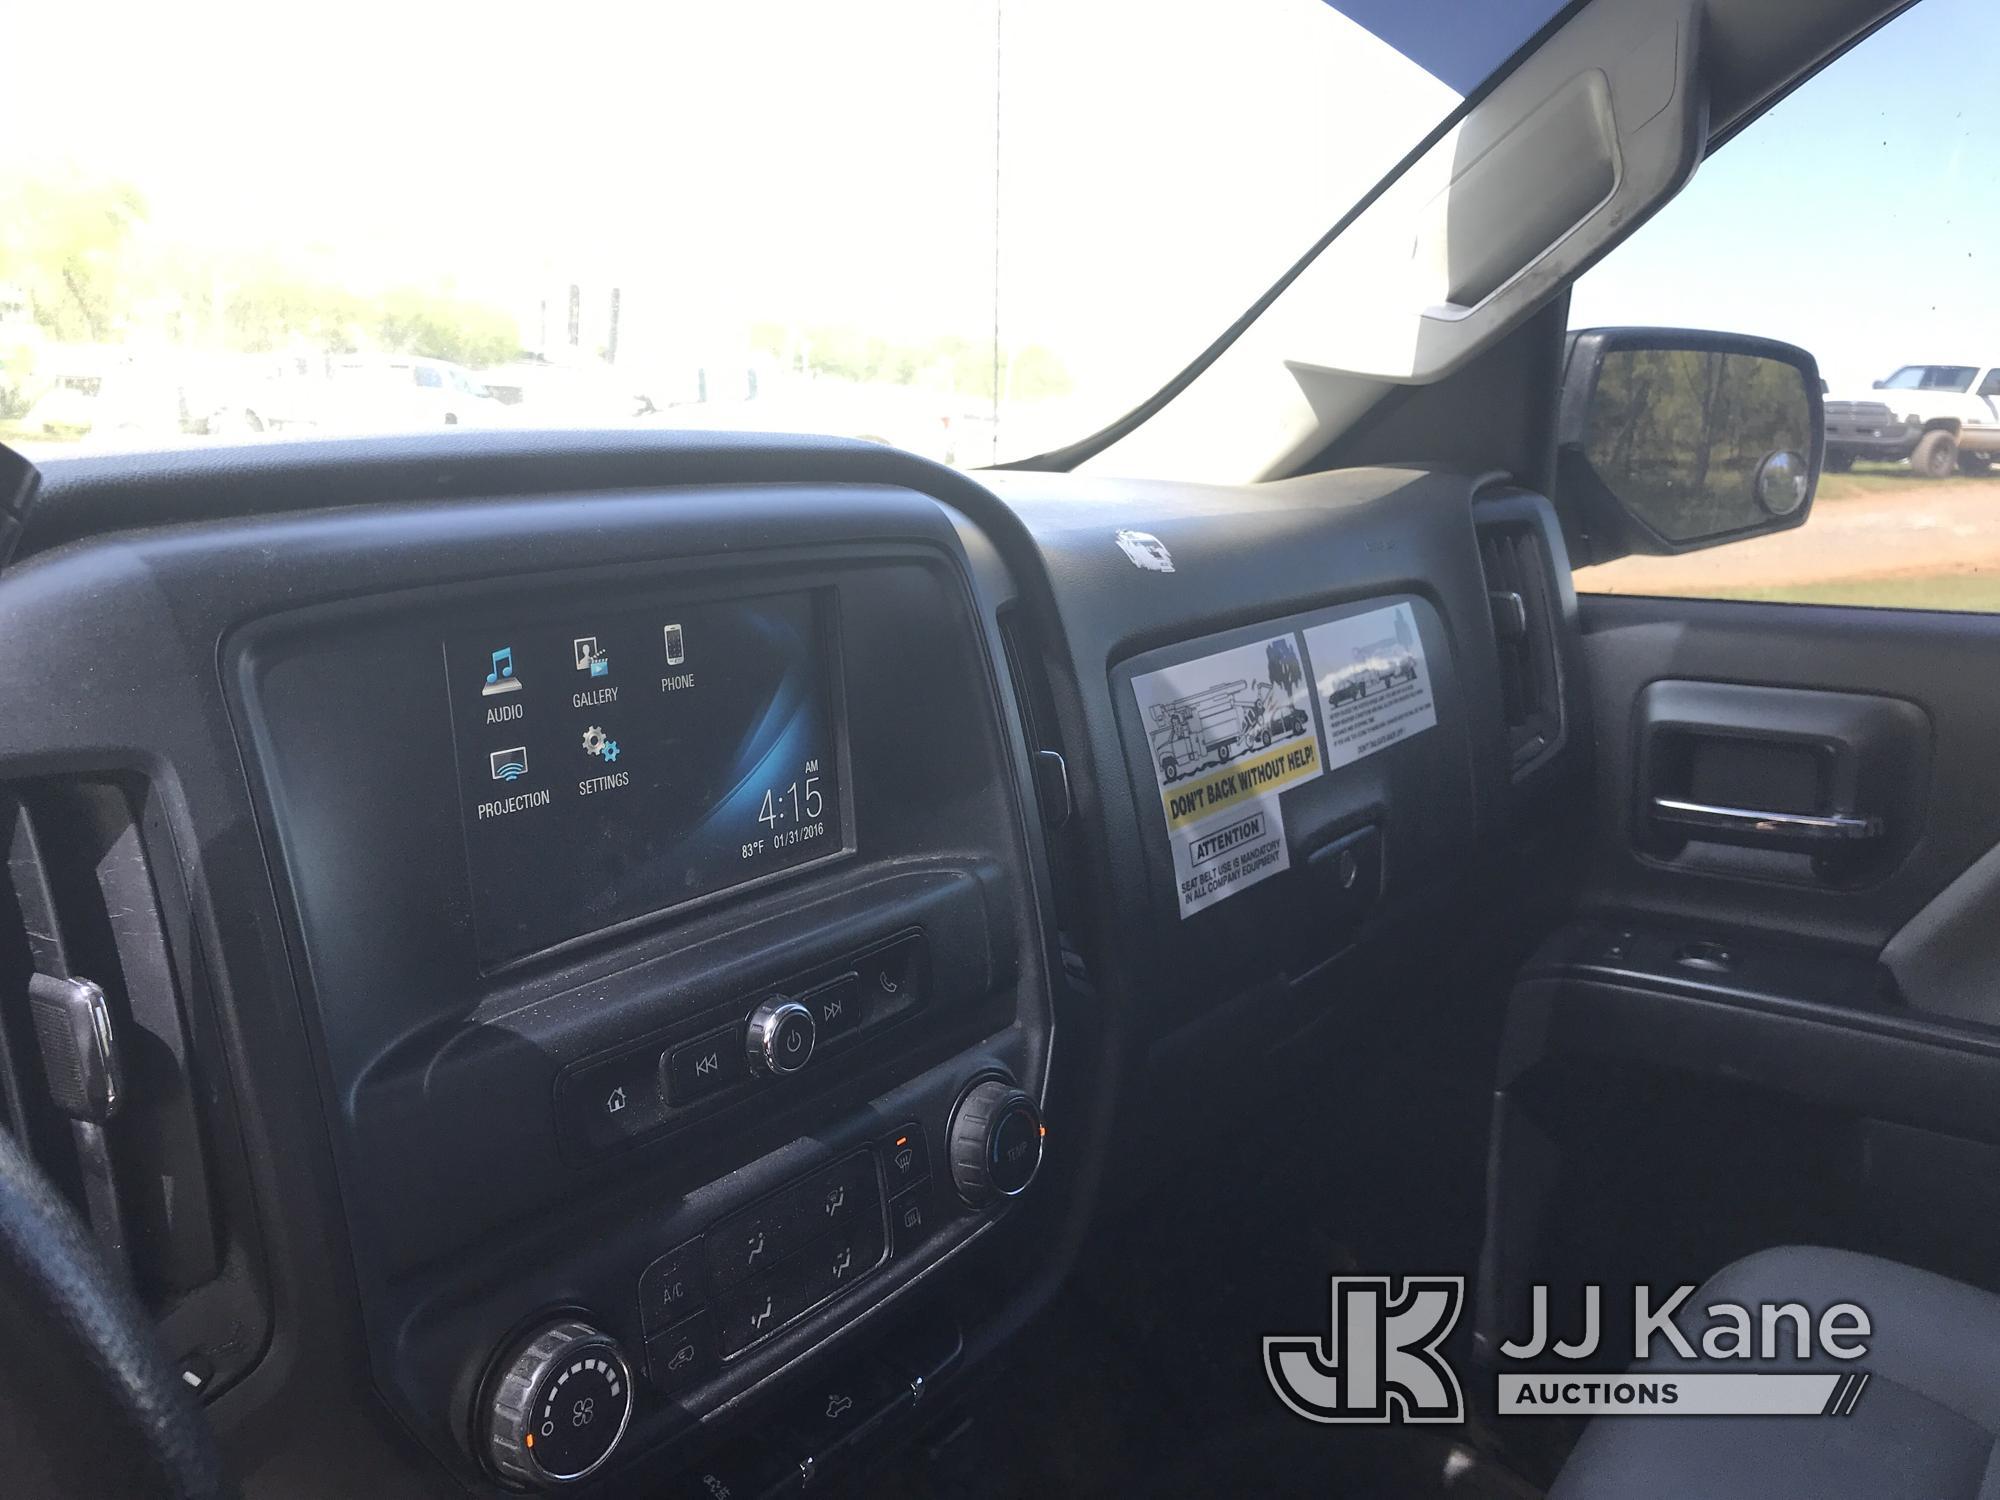 (Kodak, TN) 2016 Chevrolet Silverado 1500 Extended-Cab Pickup Truck Runs & Does Not Move) (Jump To S